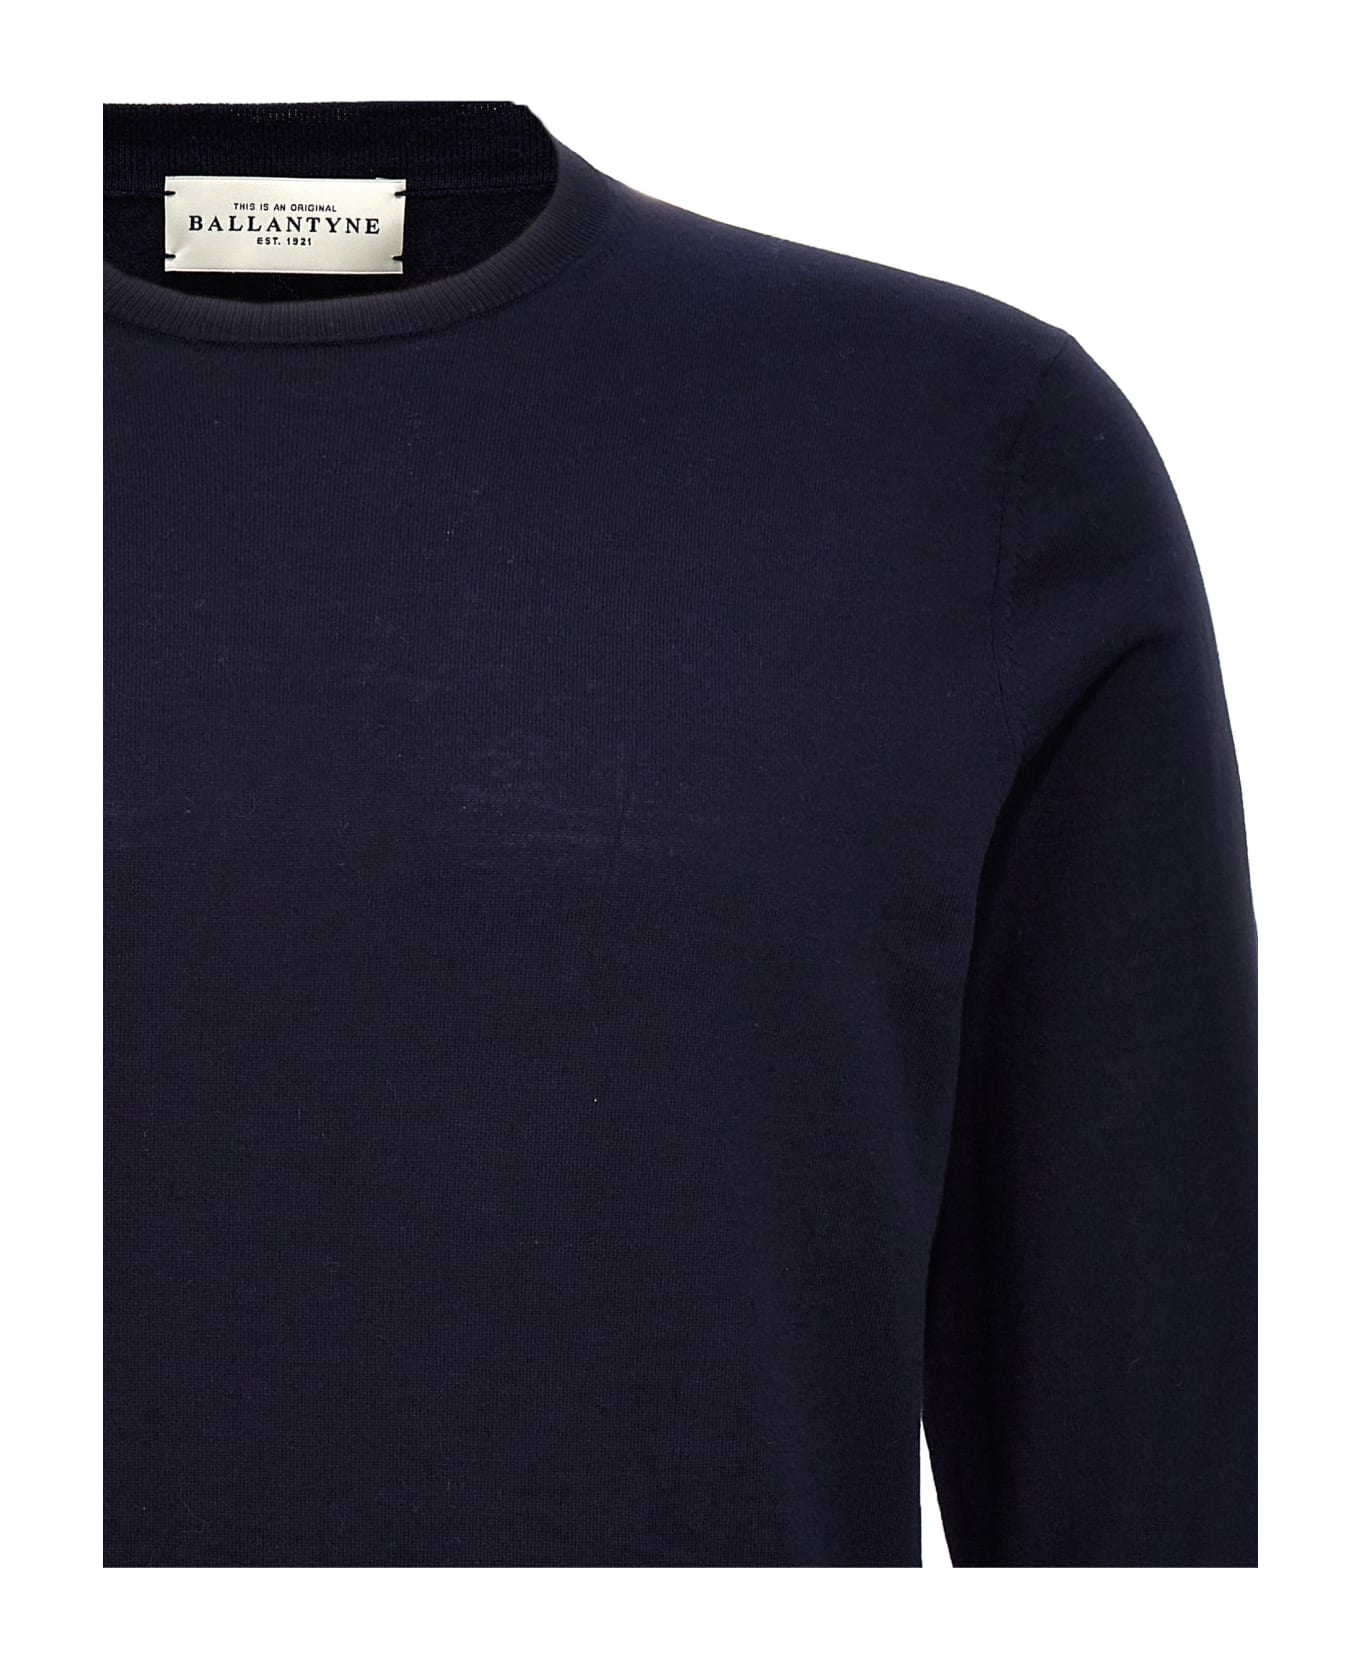 Ballantyne Cotton Sweater - Blue ニットウェア